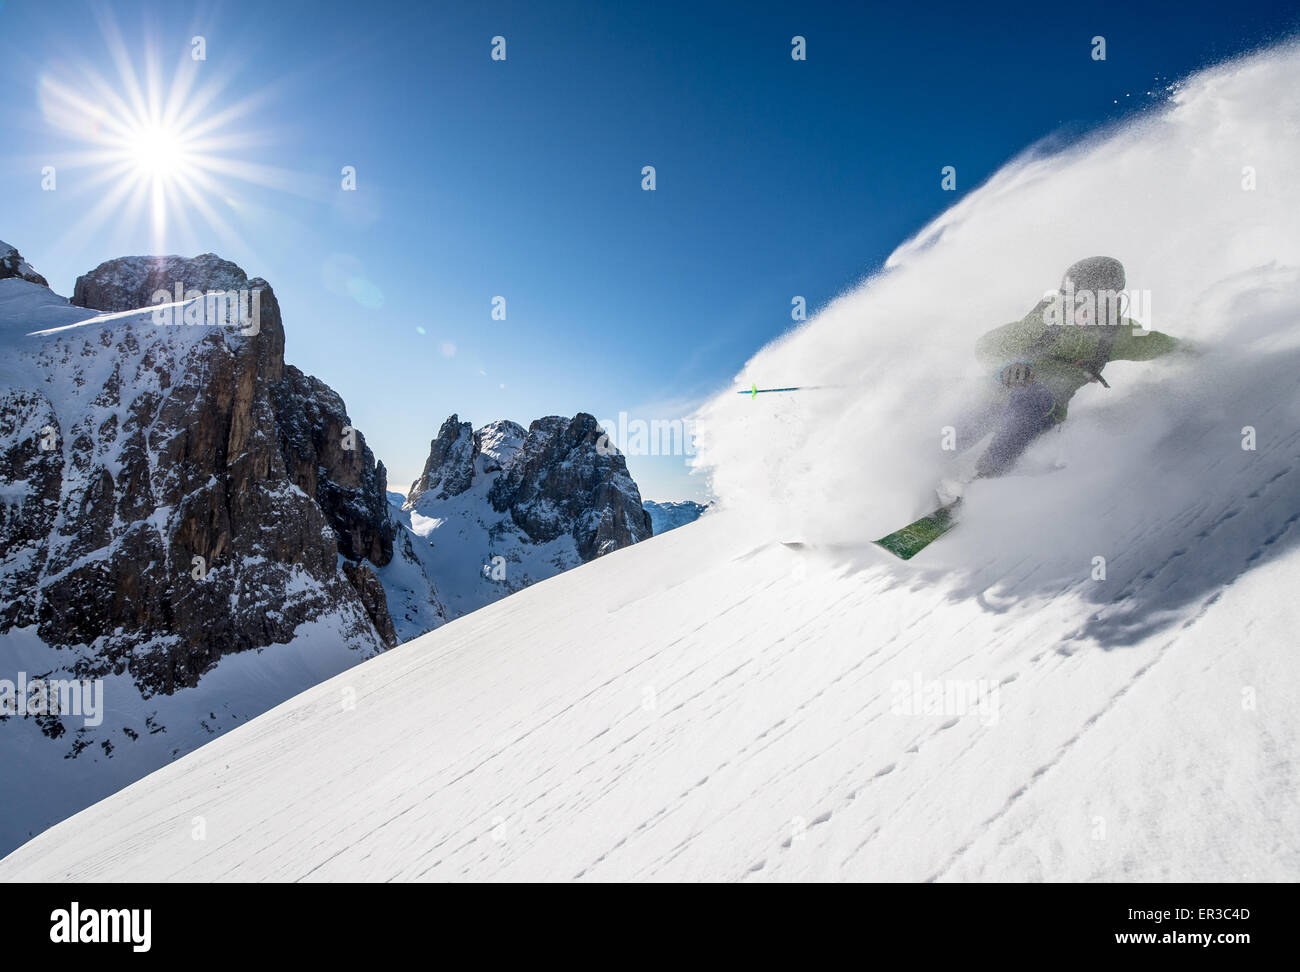 Man skiing off piste, Dolomites, Italy Stock Photo